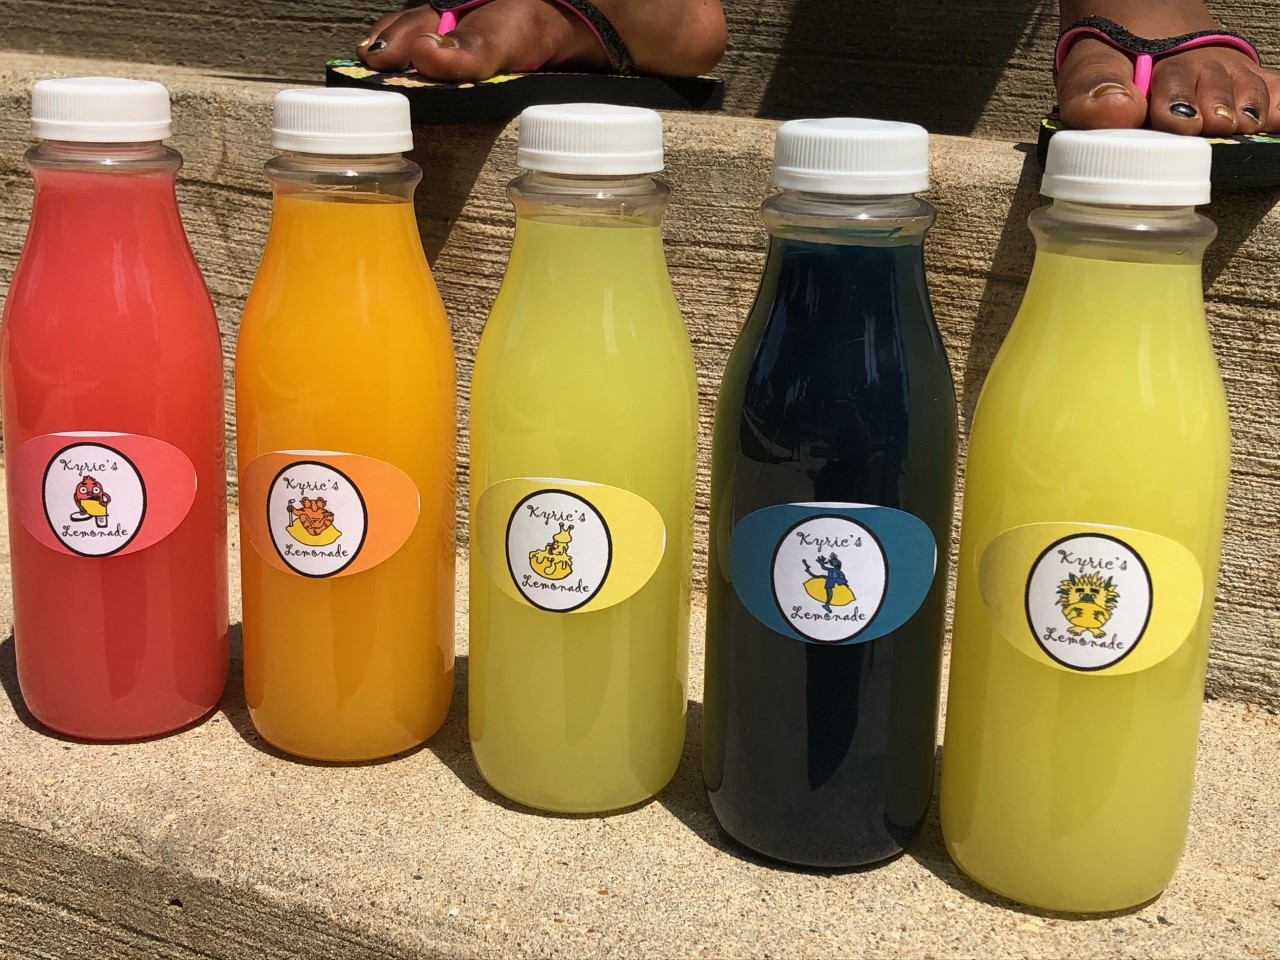 Kyric's Lemonade comes in five flavors: pink, orange, regular, blue, and pineapple. (Maureen McCollum/WPR)